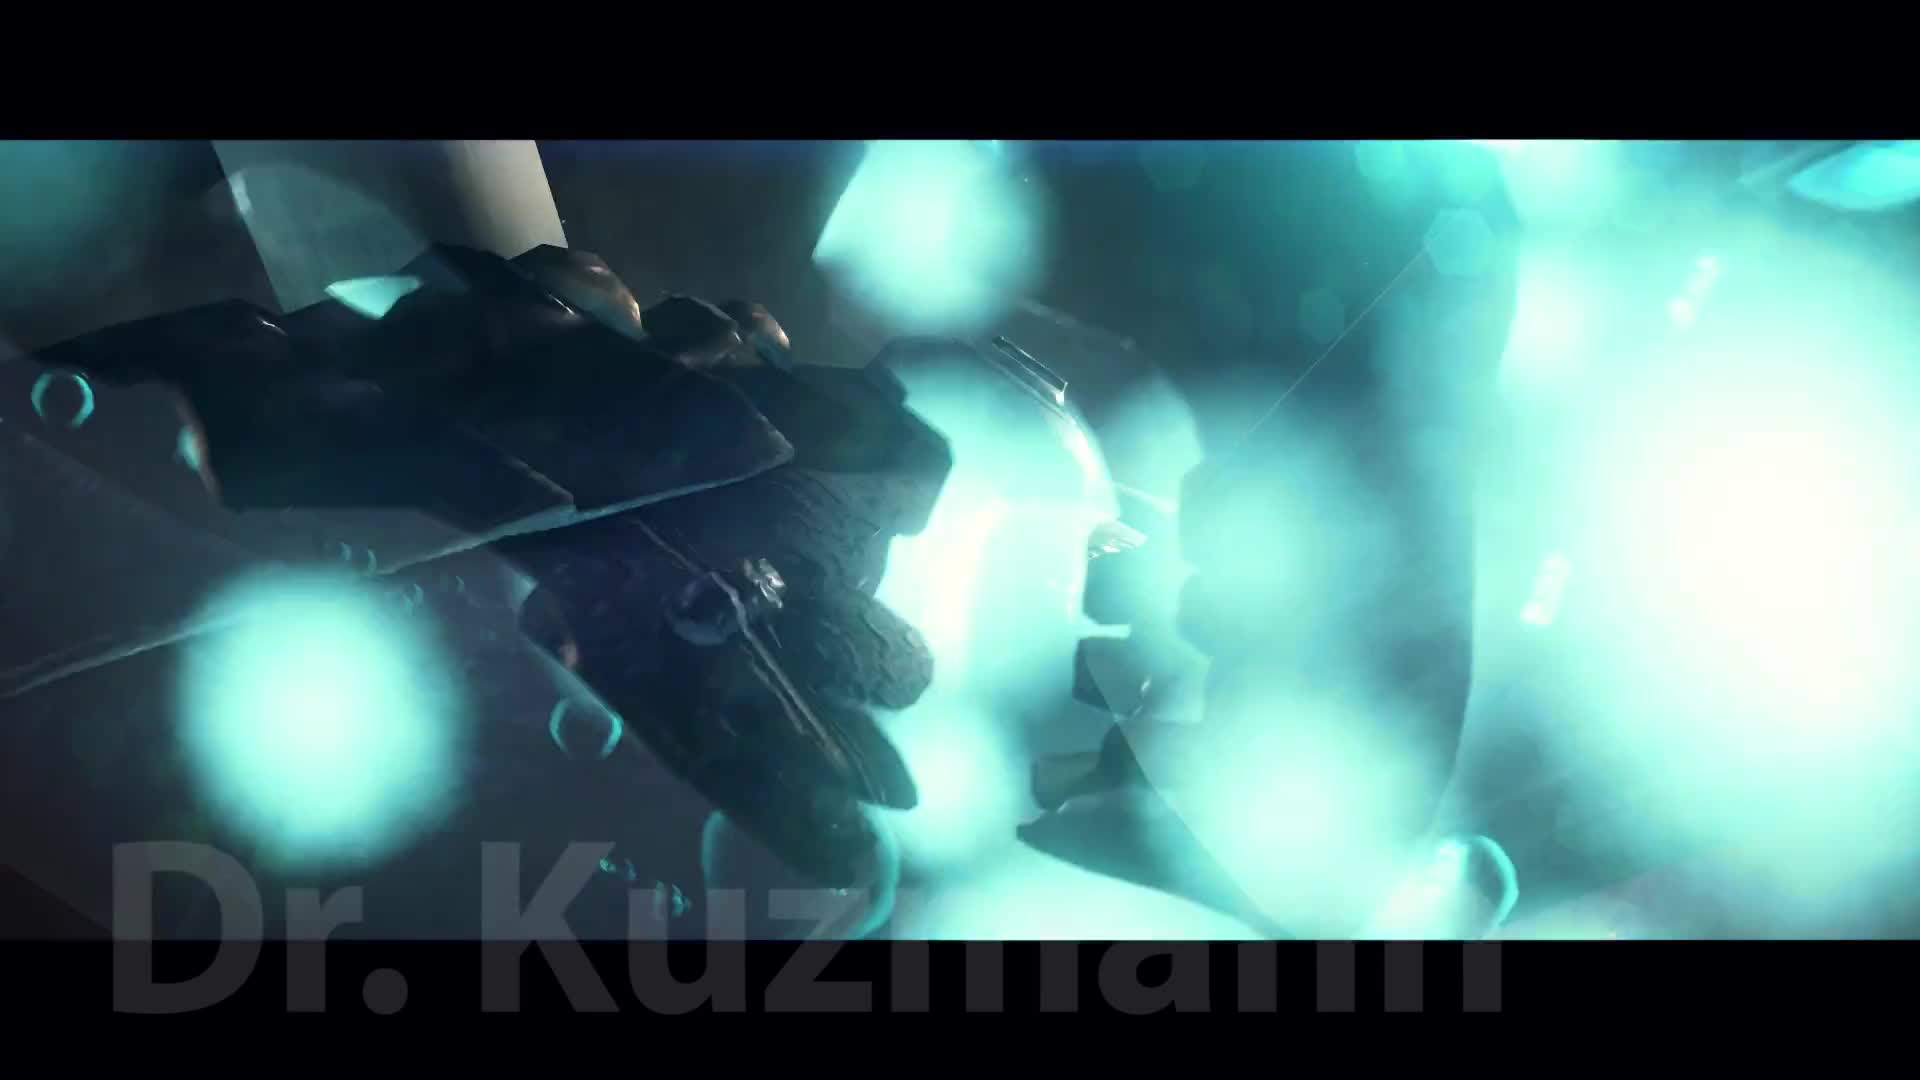 Raiders of the Broken Planet - Dr. Kuzmann Reveal Trailer